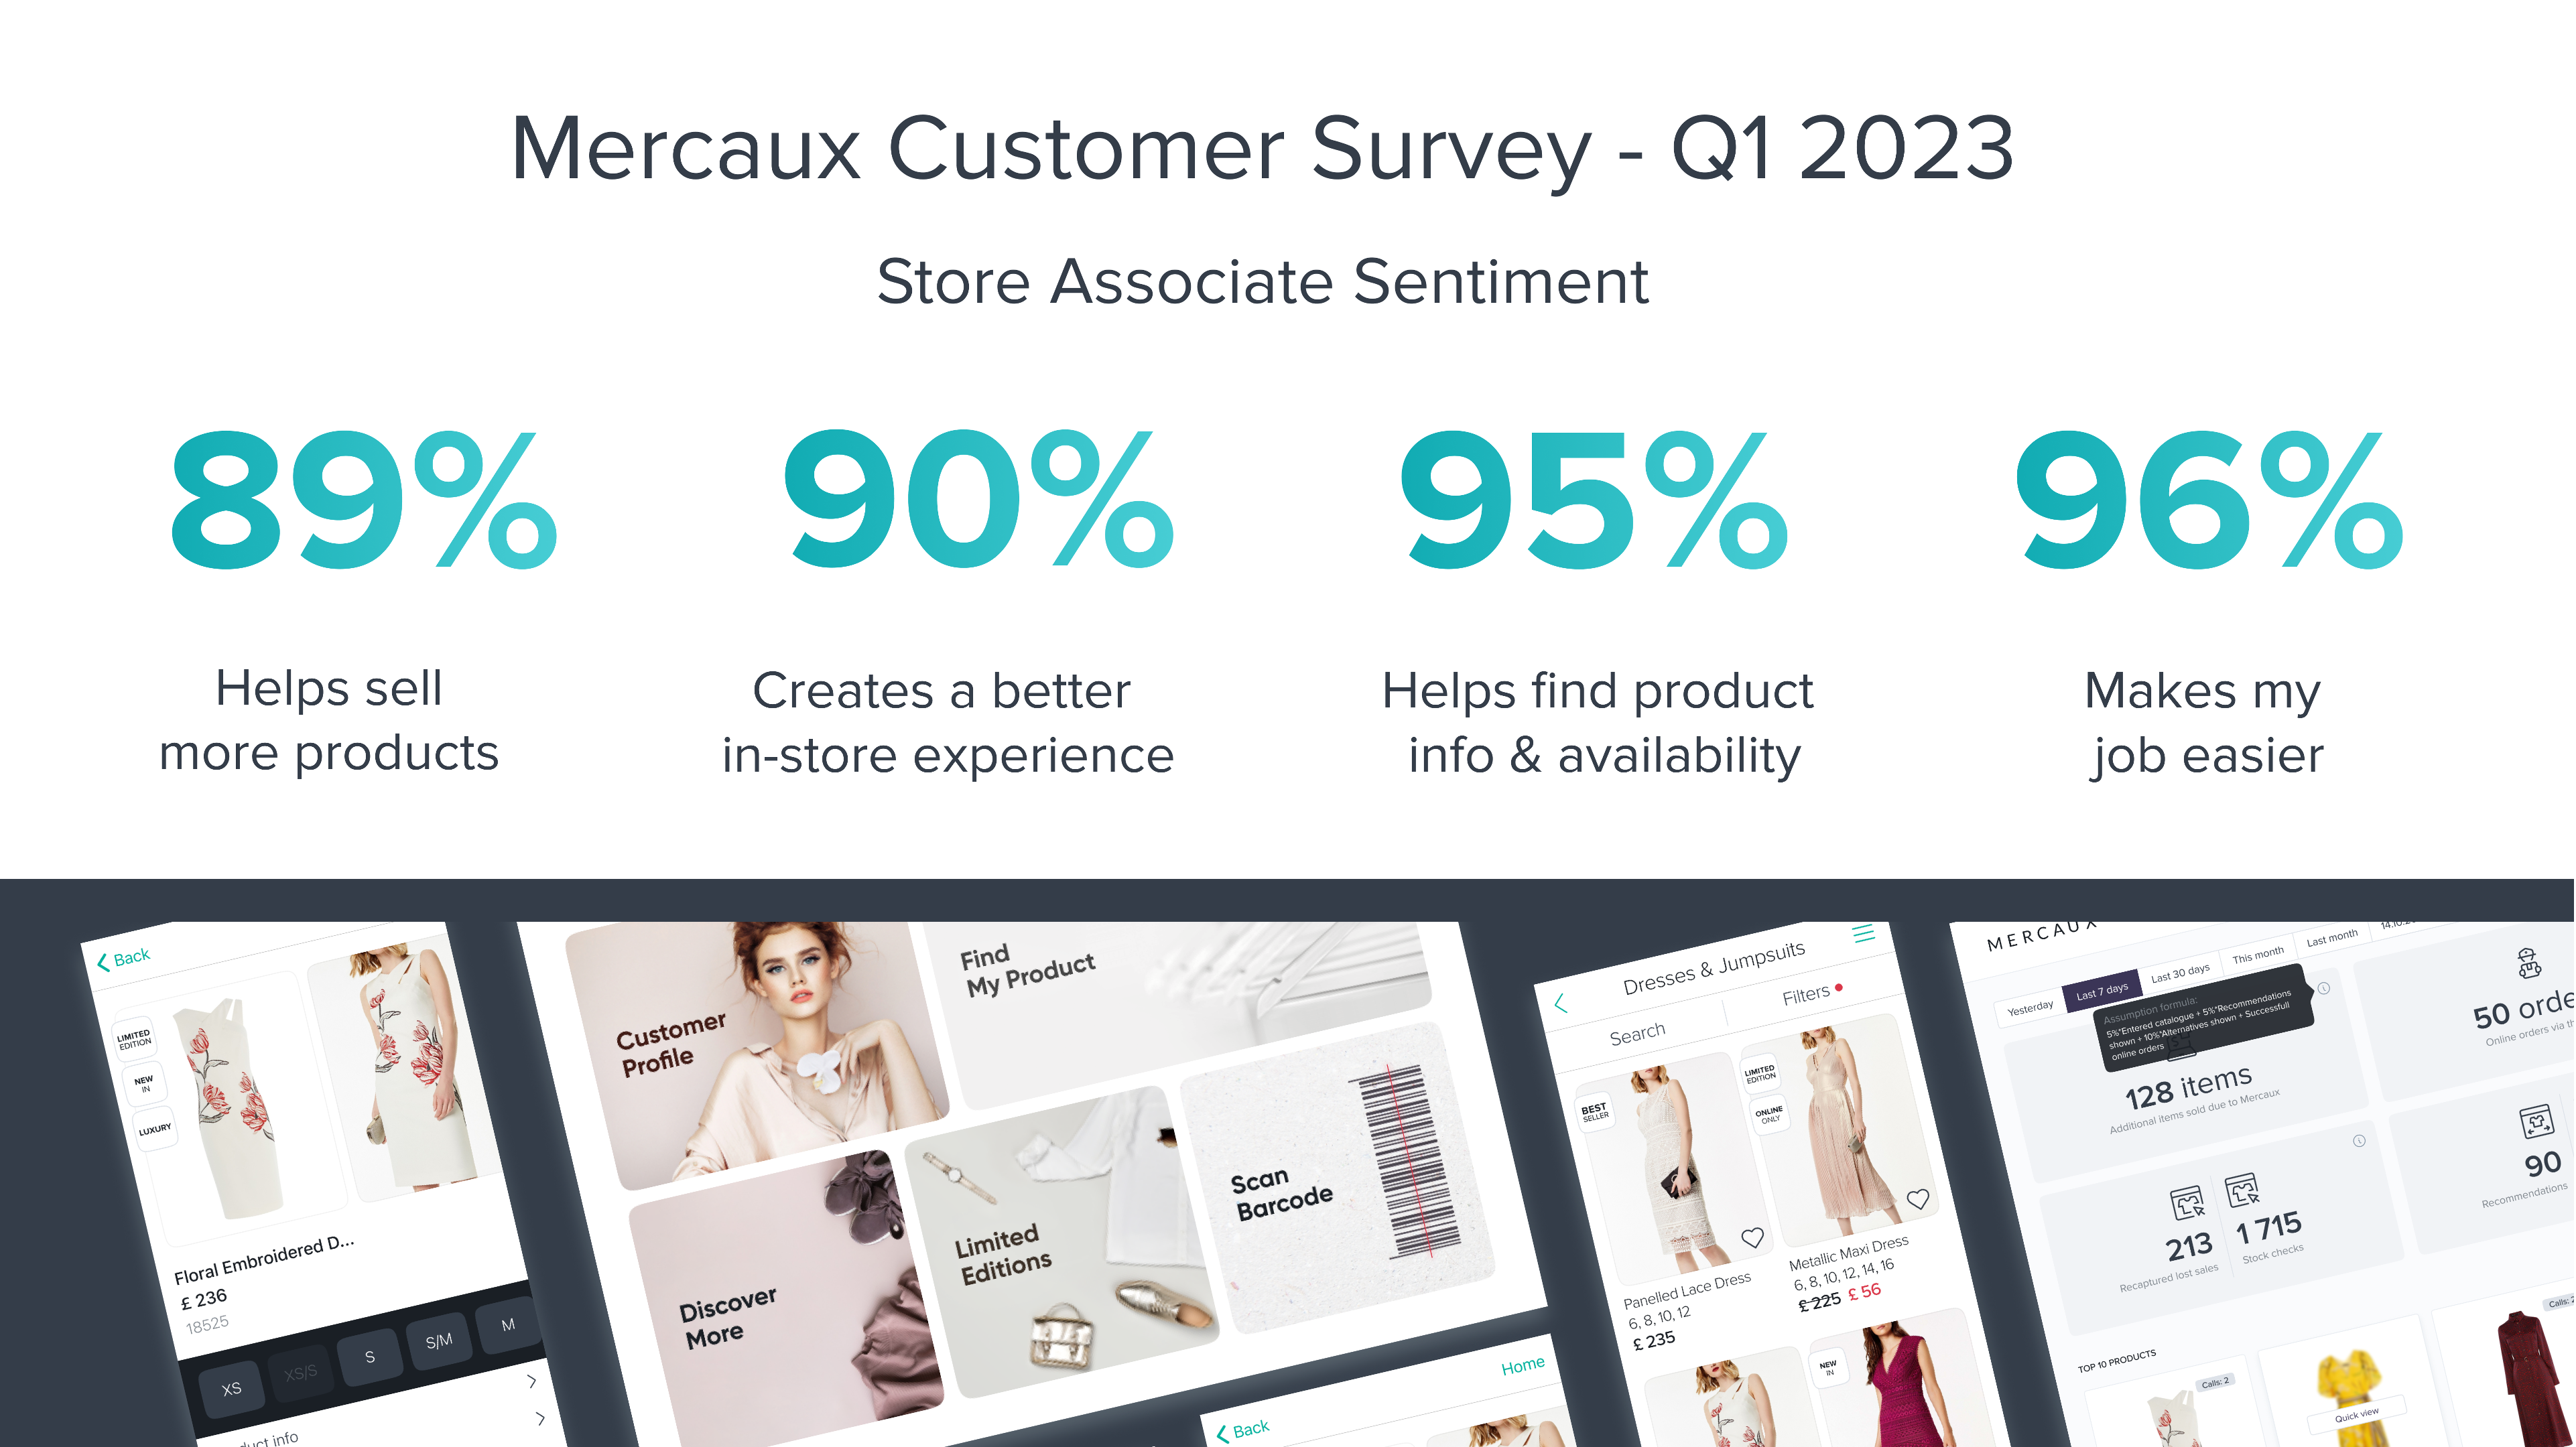 Q1 customer survey results